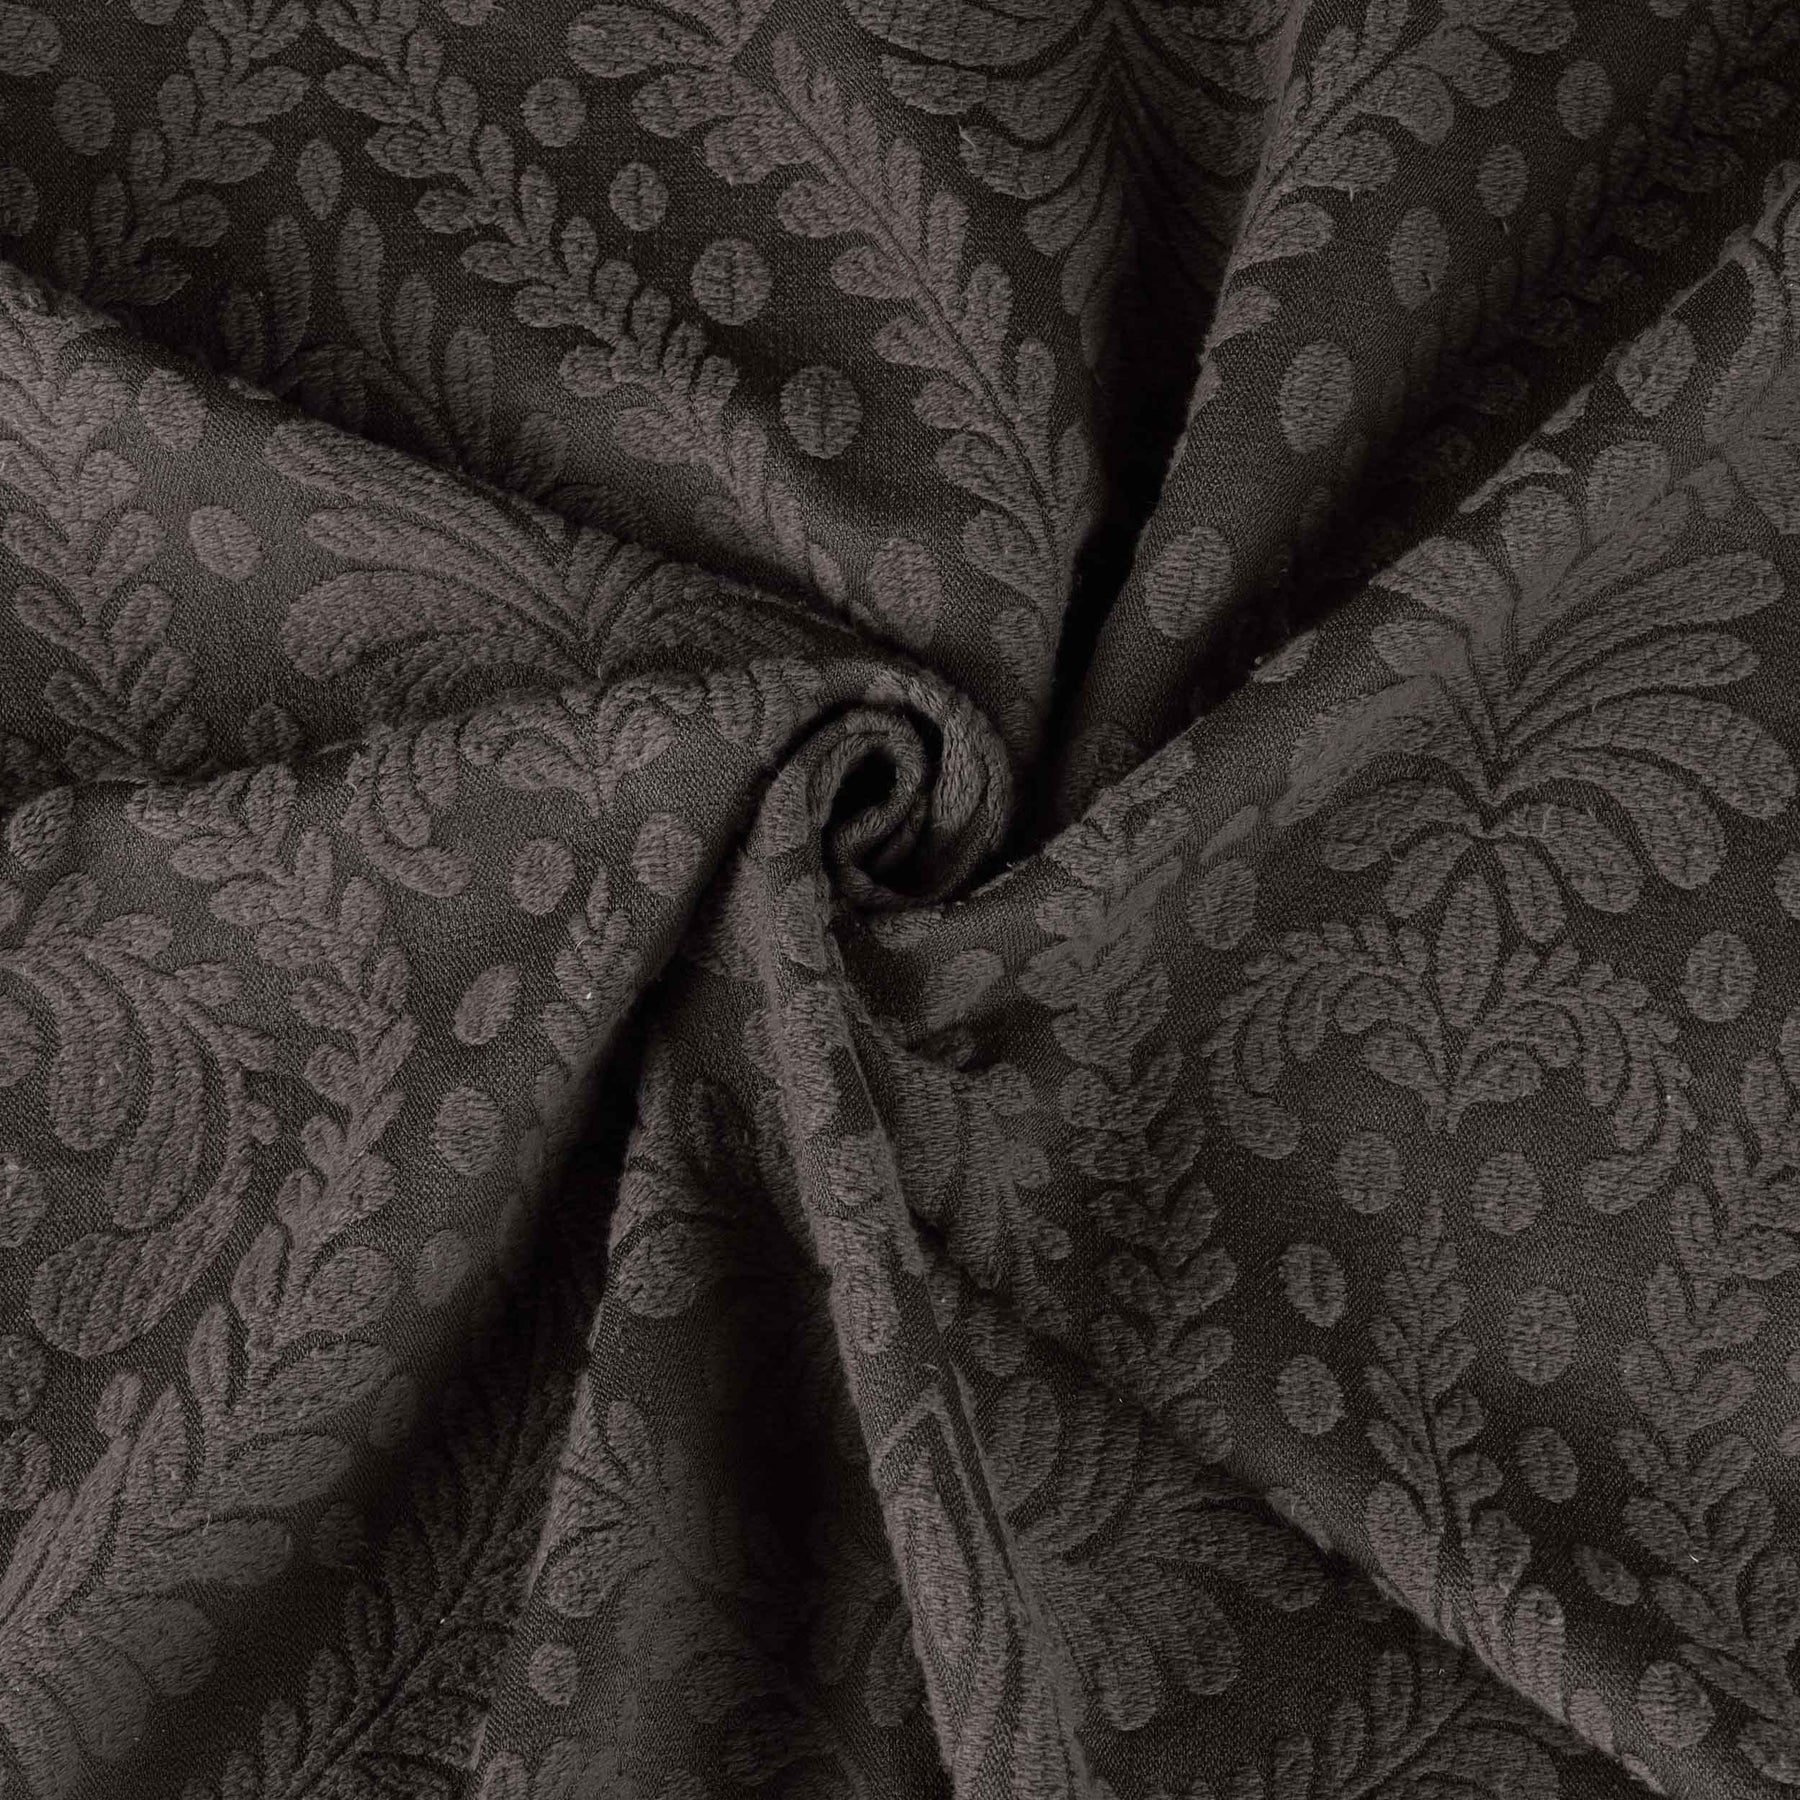 Aspen Cotton Blend Jacquard Floral Scalloped Edge Bedspread Set - Charcoal